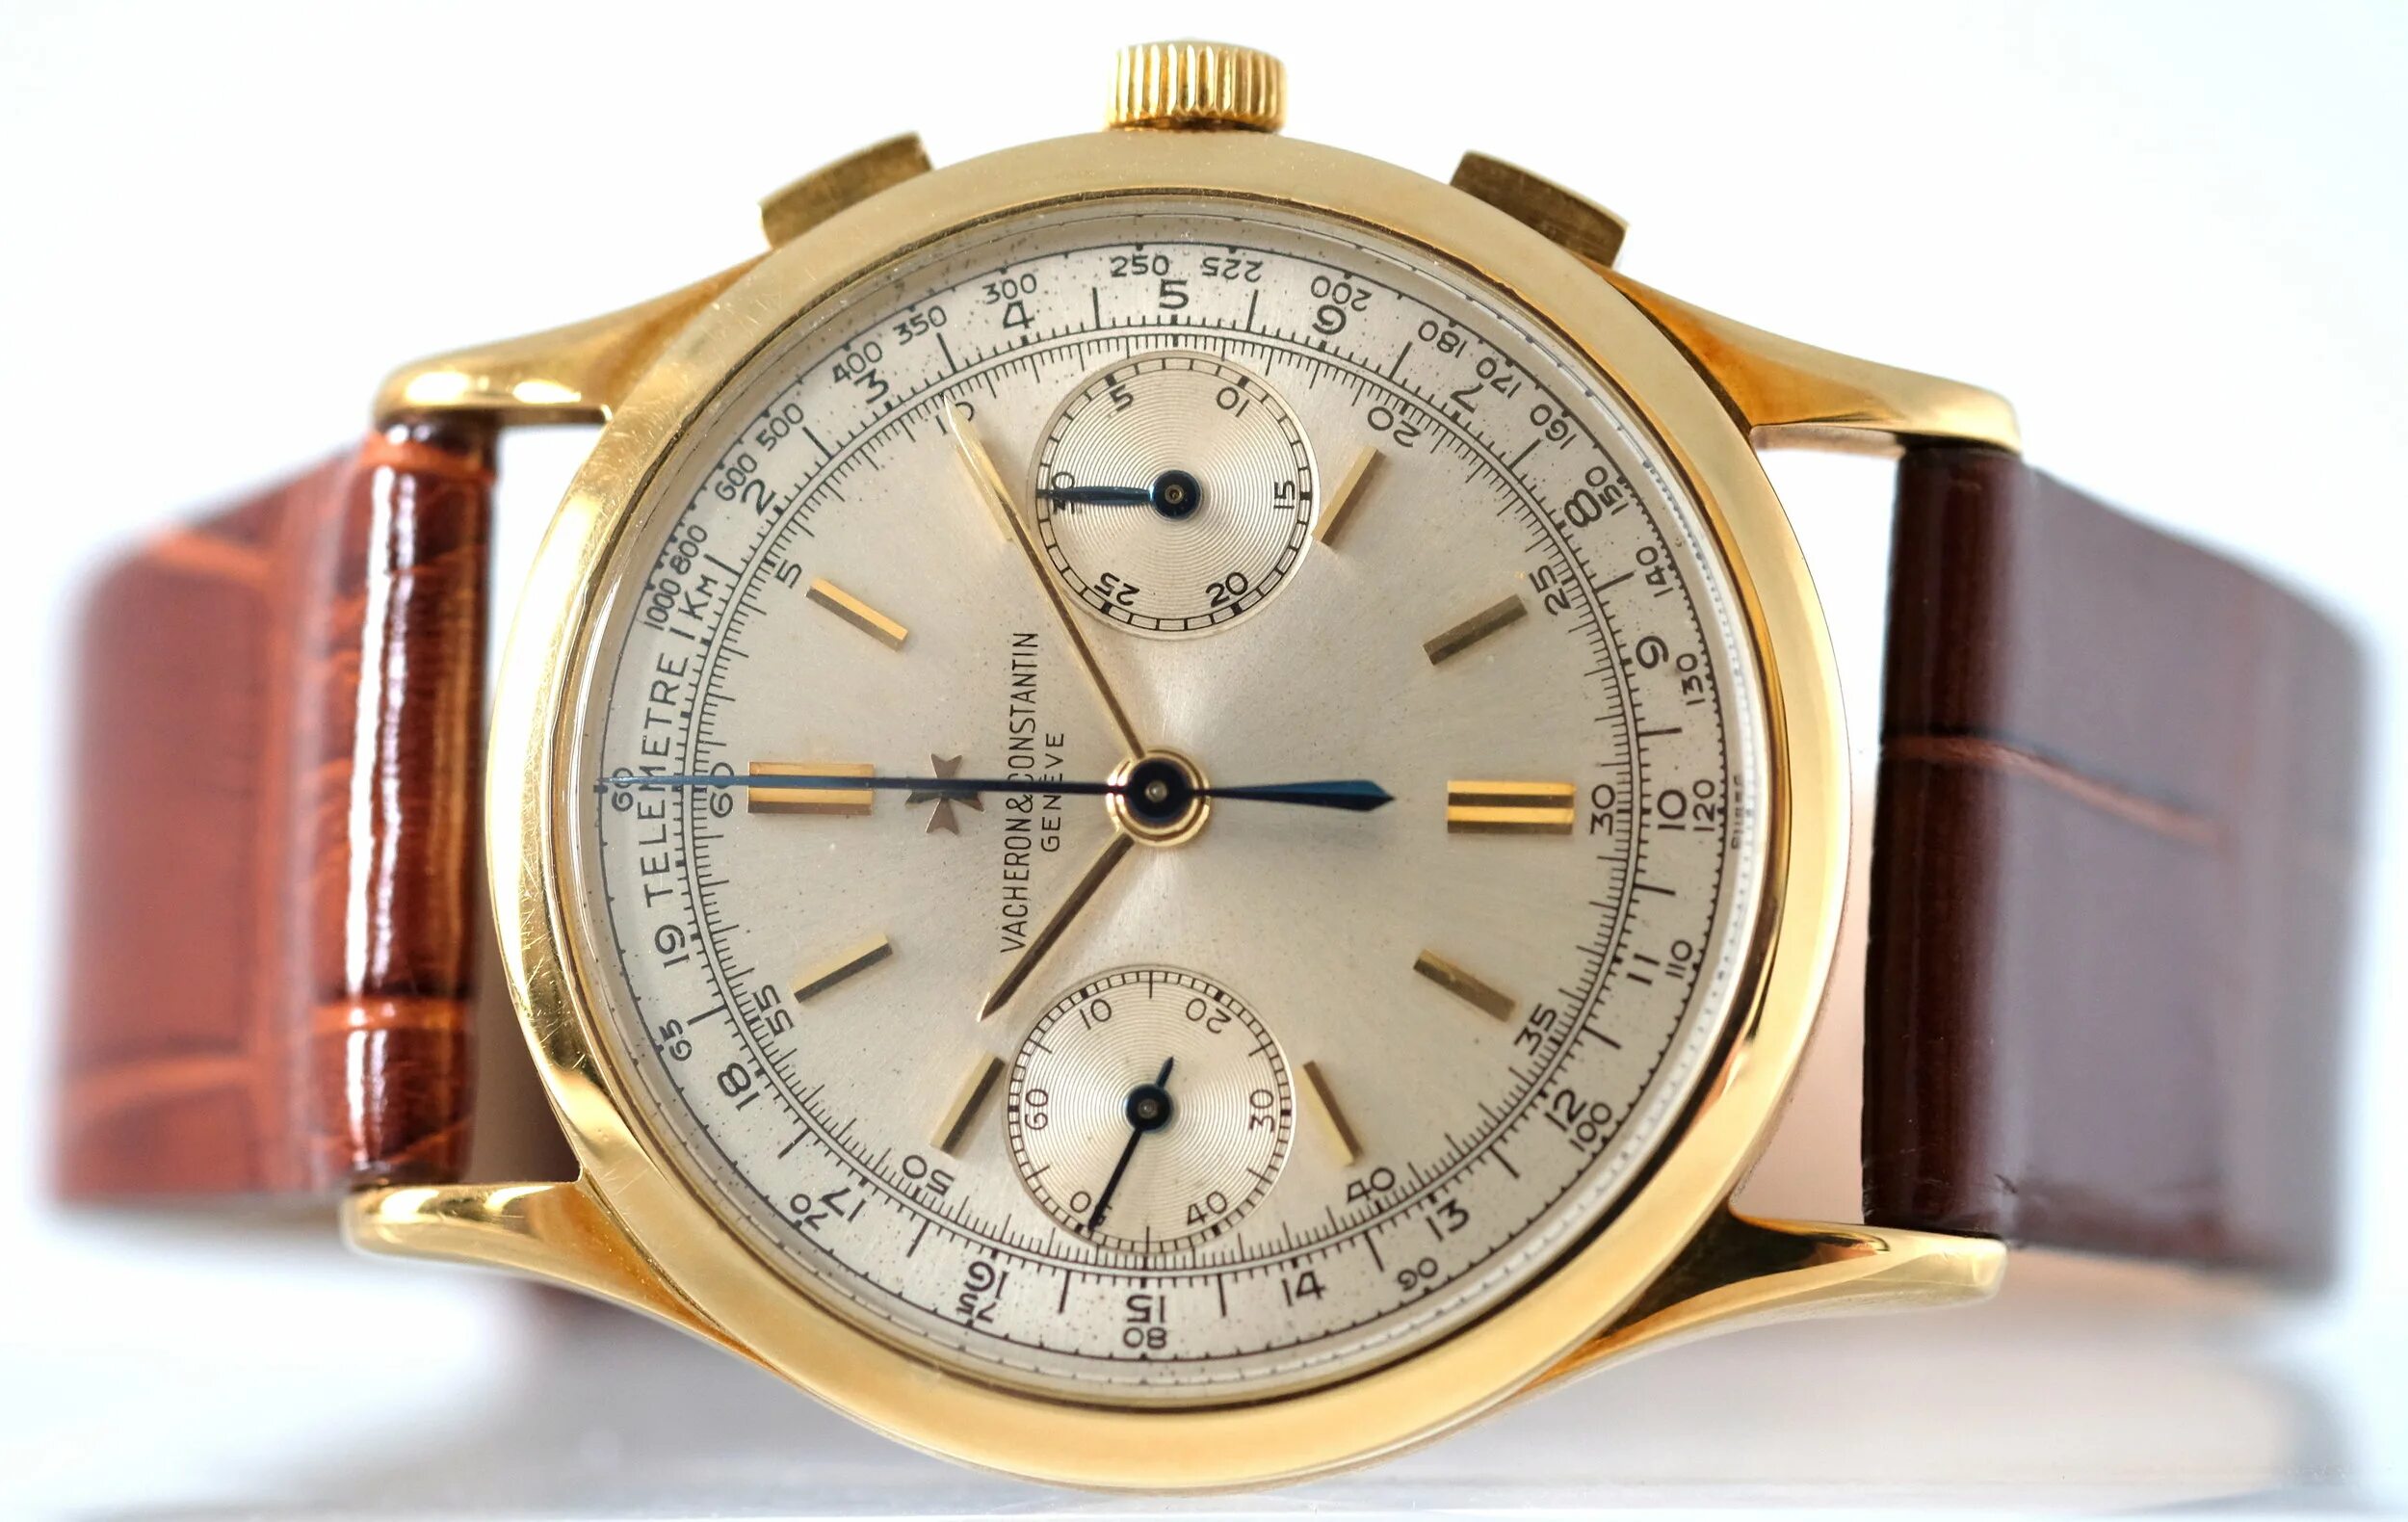 Sold watch. Vacheron Constantin 3atm 47120 Swiss made 123456 950pt. Vacheron Constantin Мальтийский крест.